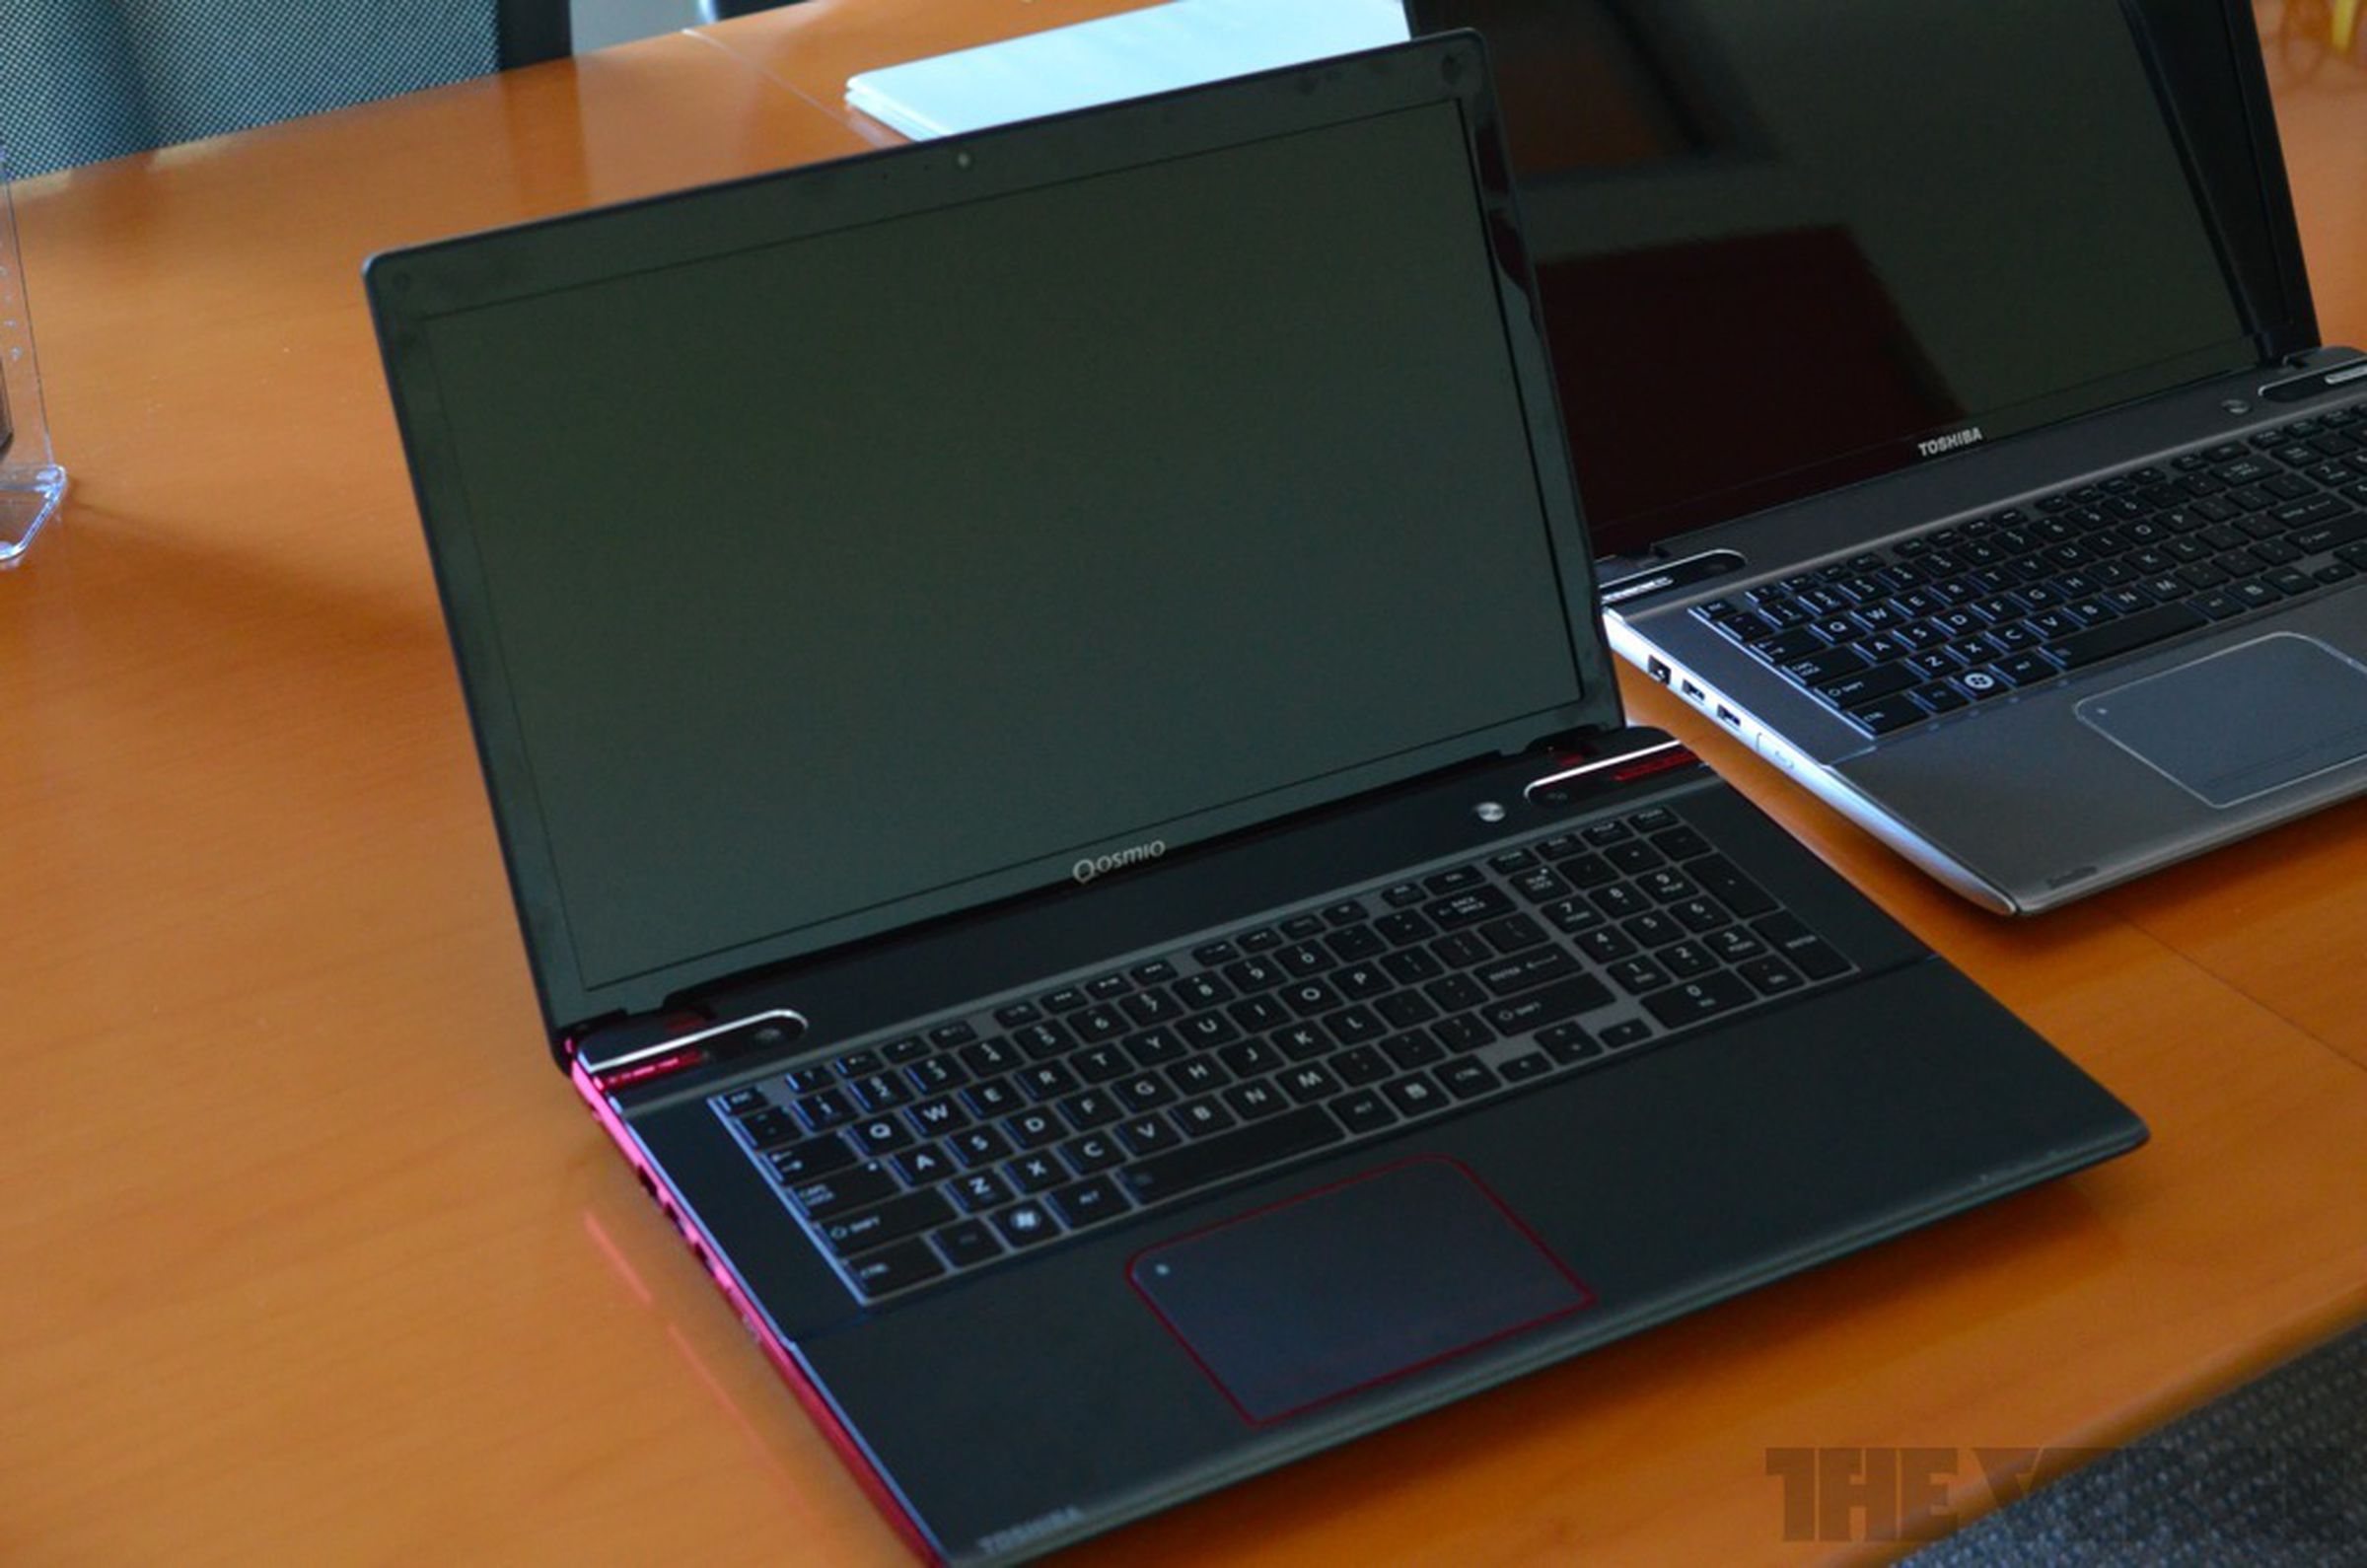 Toshiba's 2012 laptop lineup